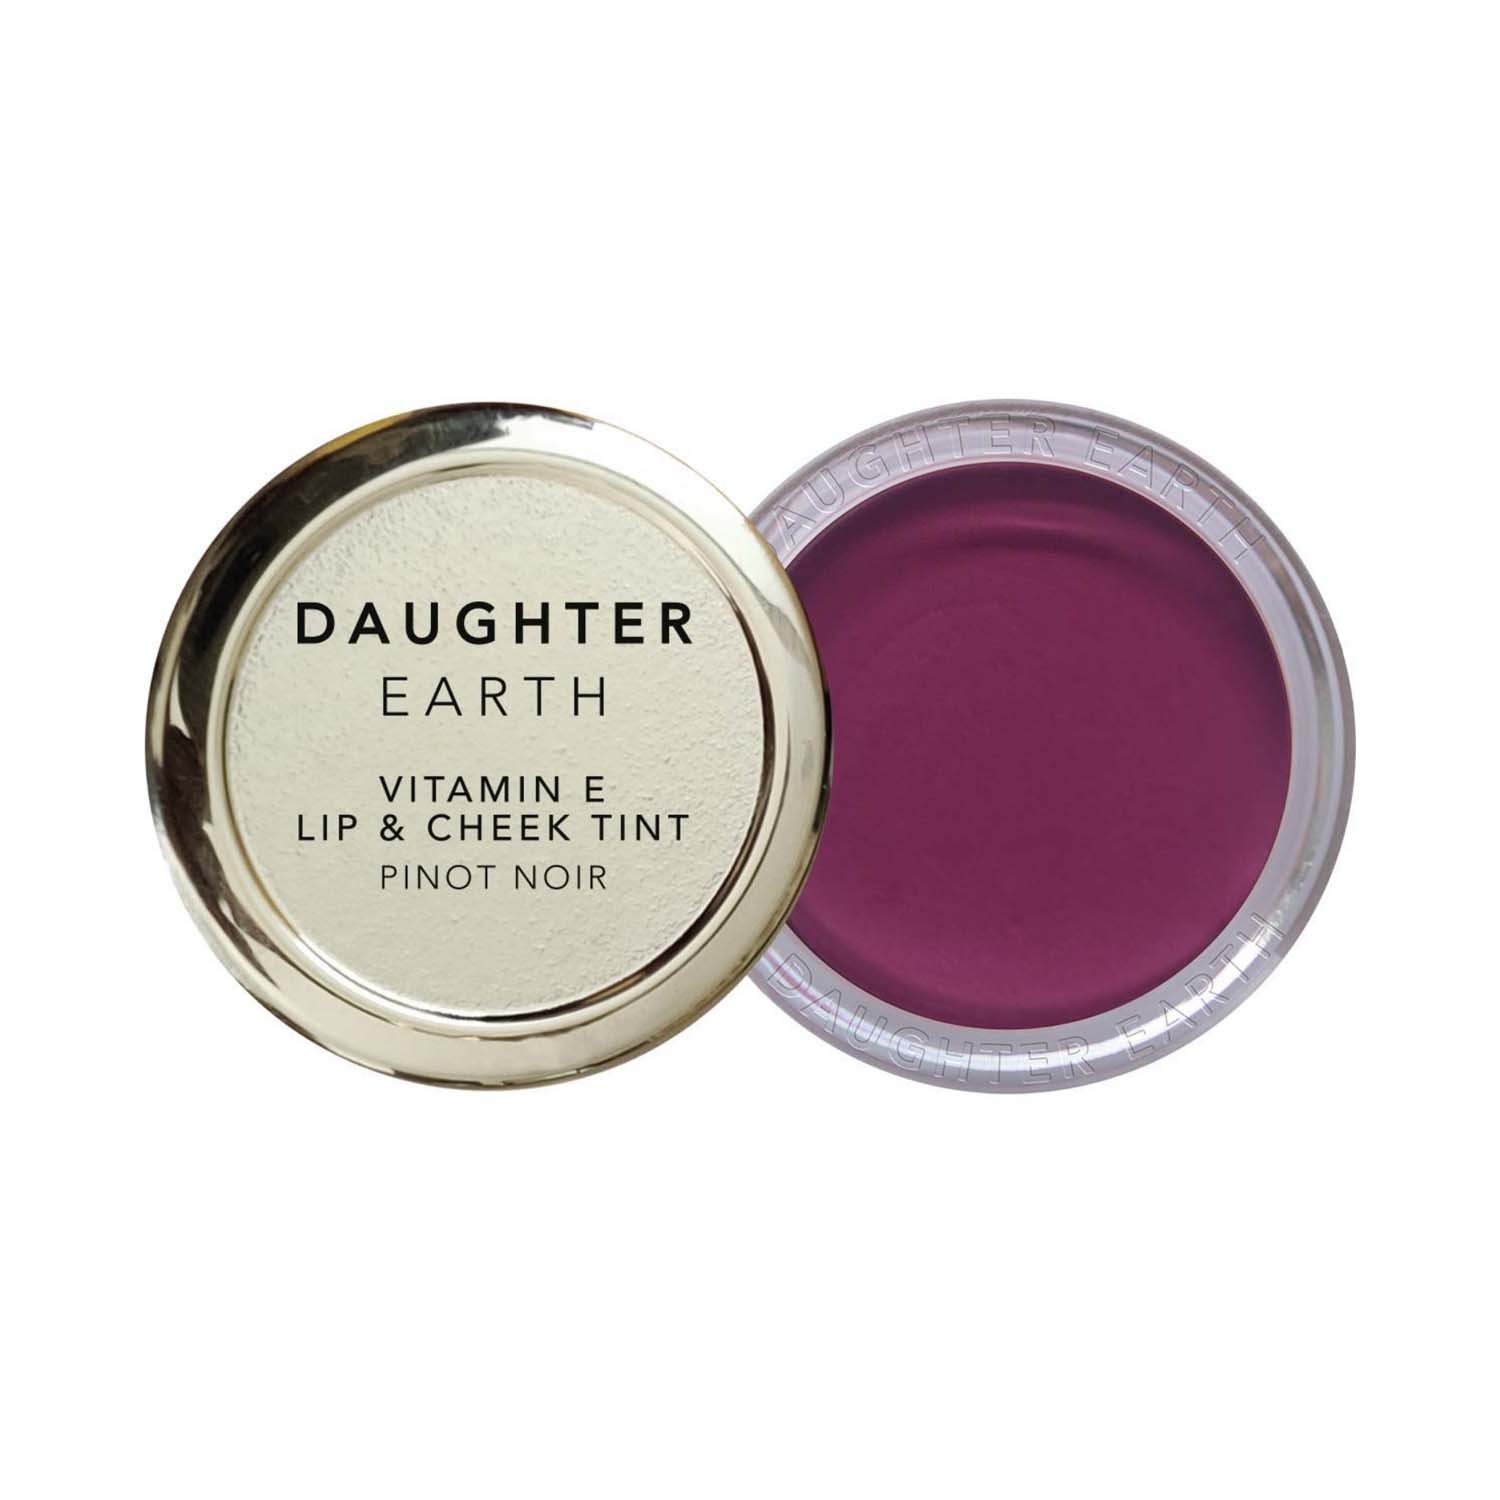  | DAUGHTER EARTH Vitamin E Lip & Cheek Tint - Pinot Noir (4.5g)